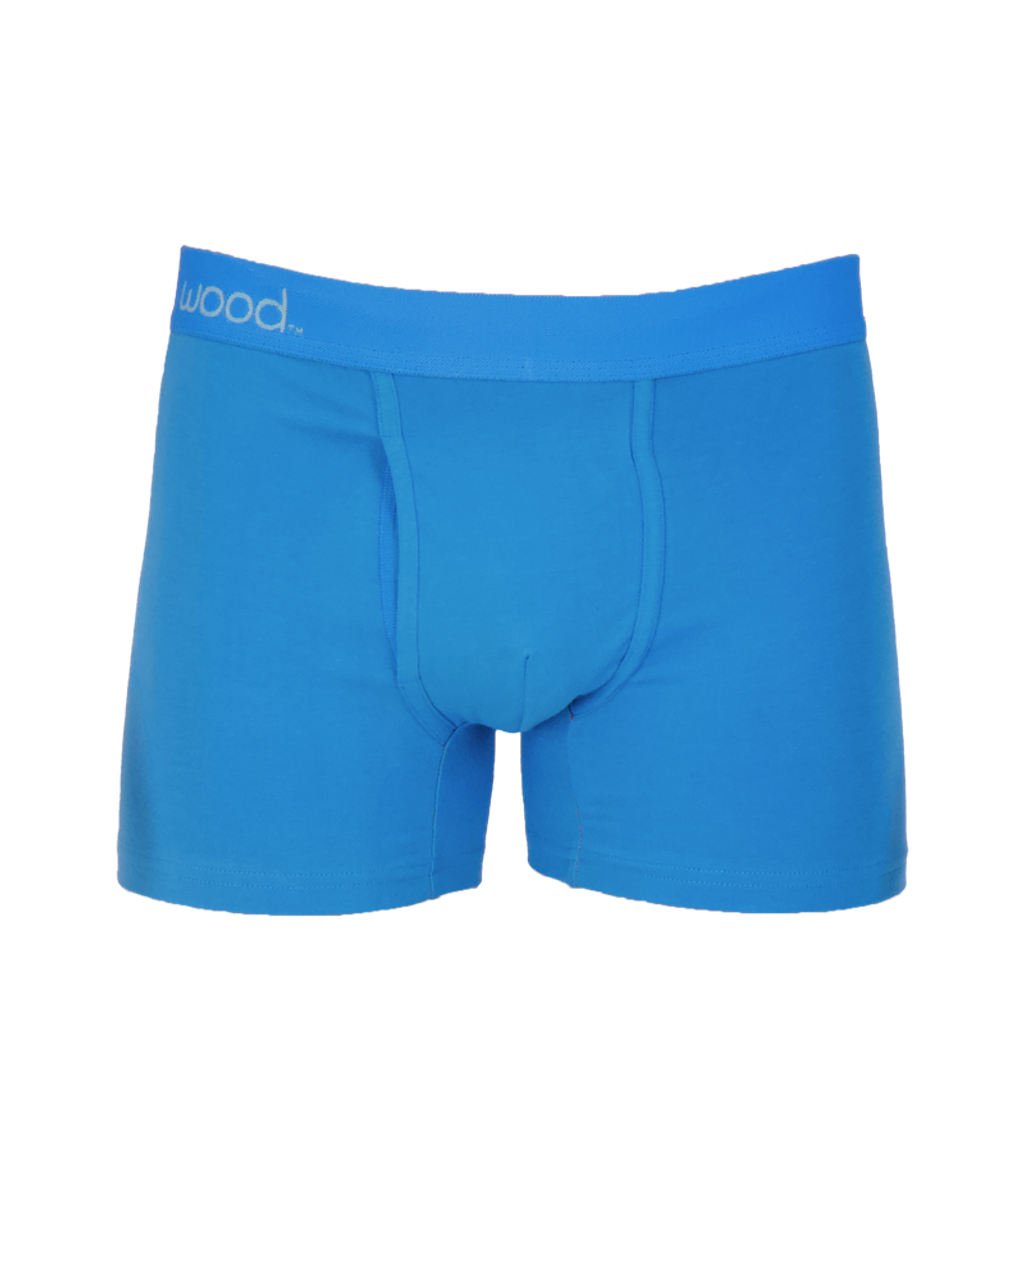 Boxer Brief w/ Fly in Swedish Blue by Wood Underwear